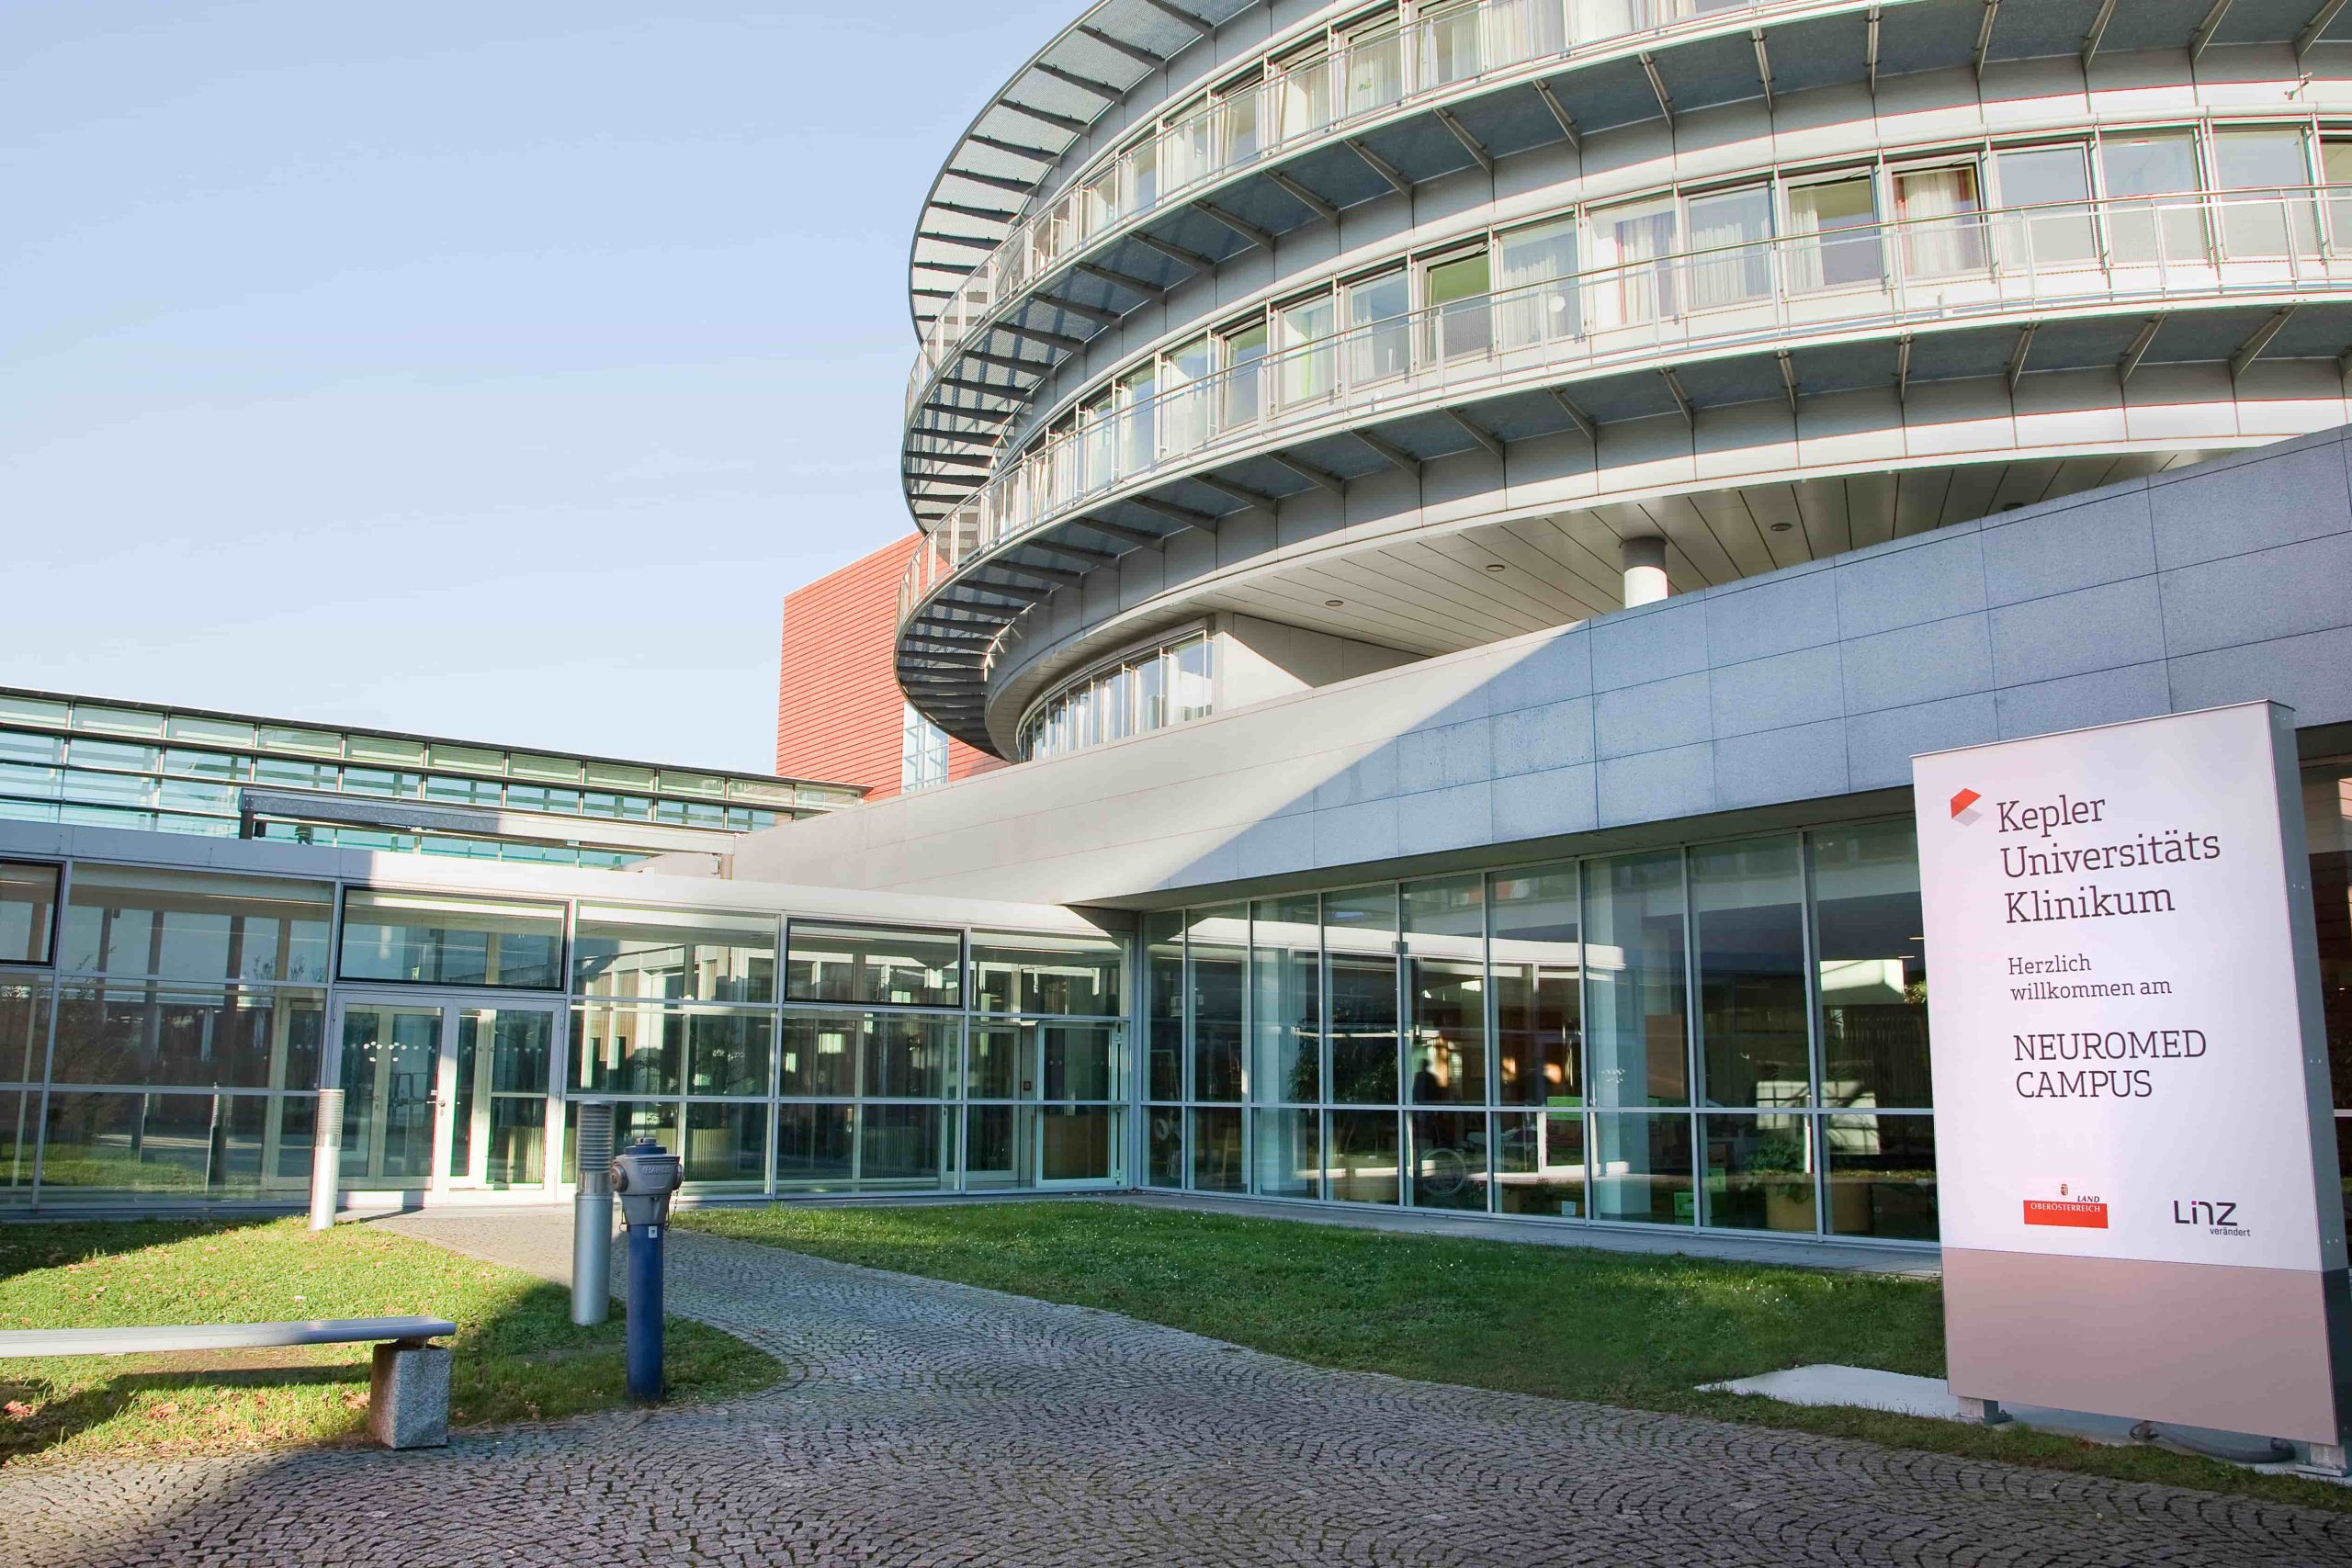 scc-kepler-universitaetsklinikum_neuromed-campus